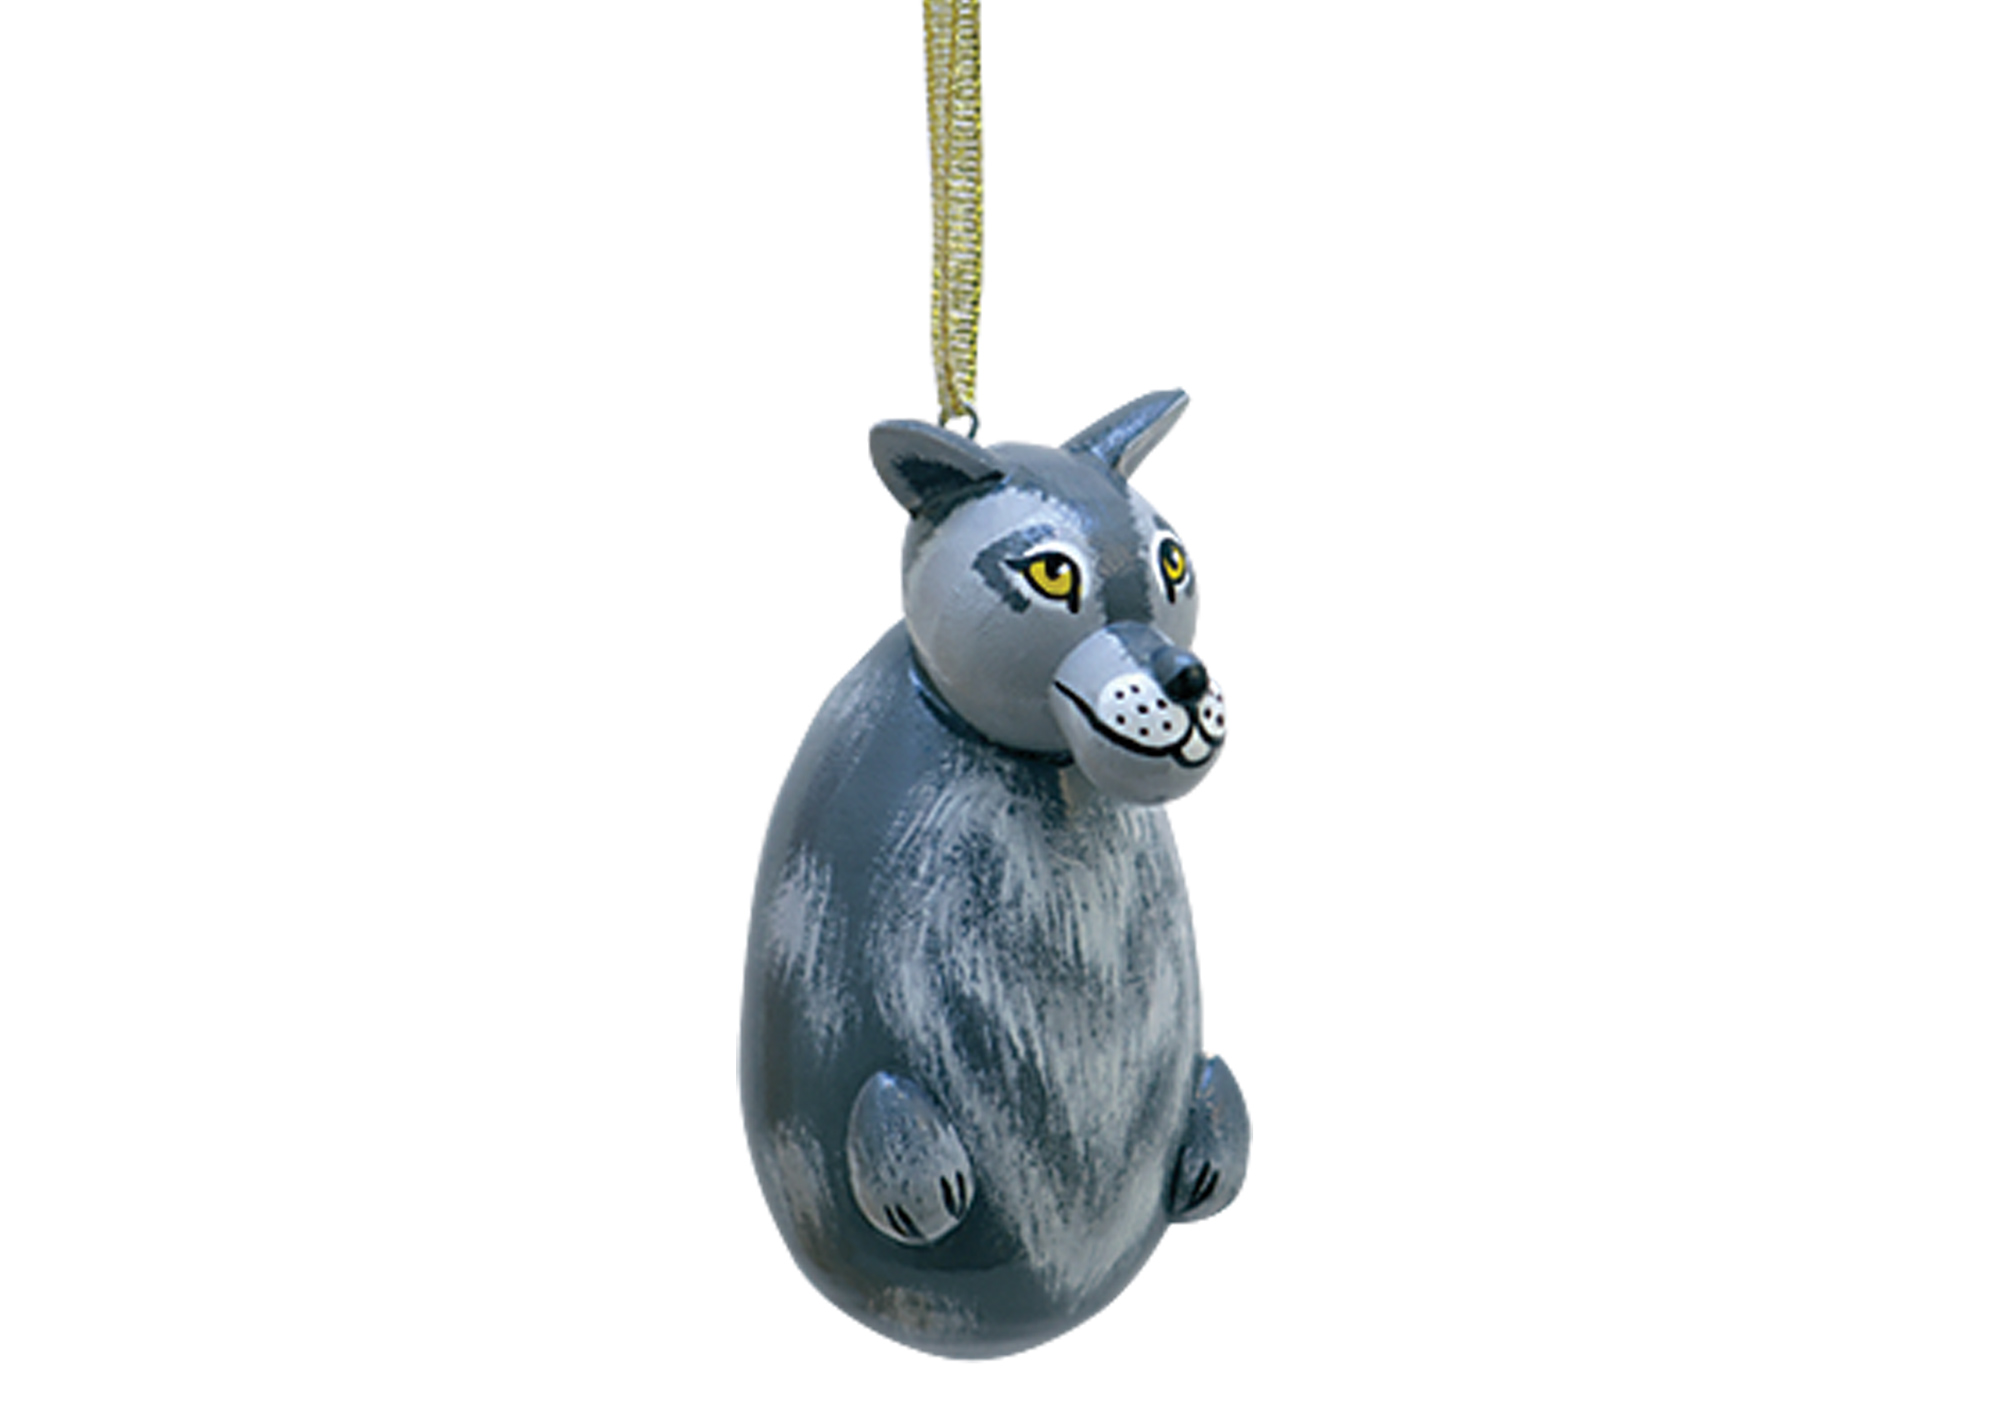 Buy Wolf Ornament 2" at GoldenCockerel.com